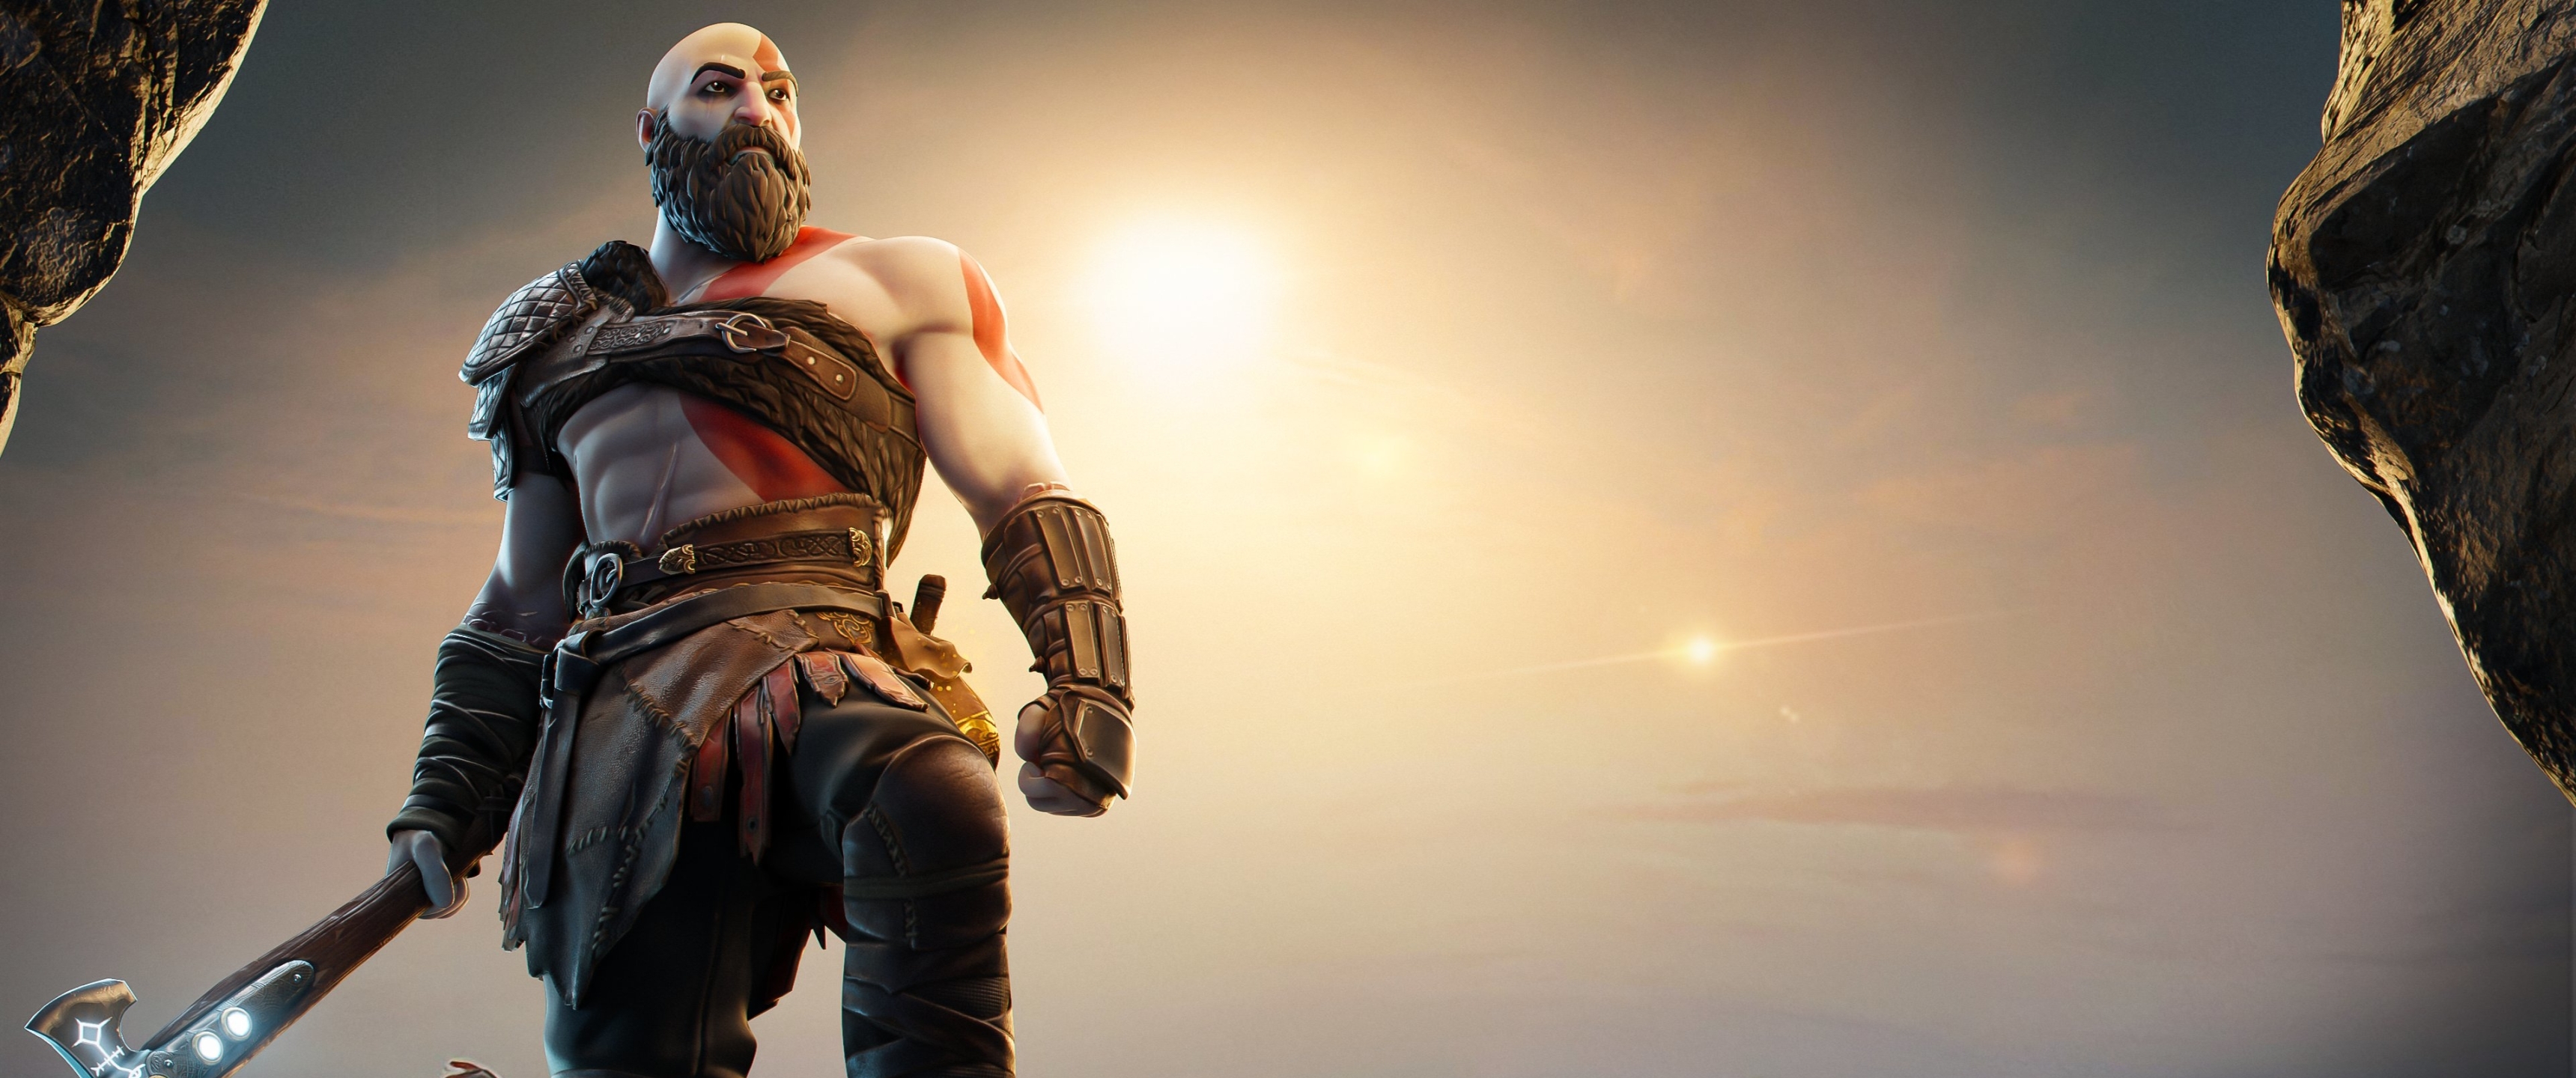 3440x1440 God Of War Kratos in Fortnite 3440x1440 Resolution Wallpaper